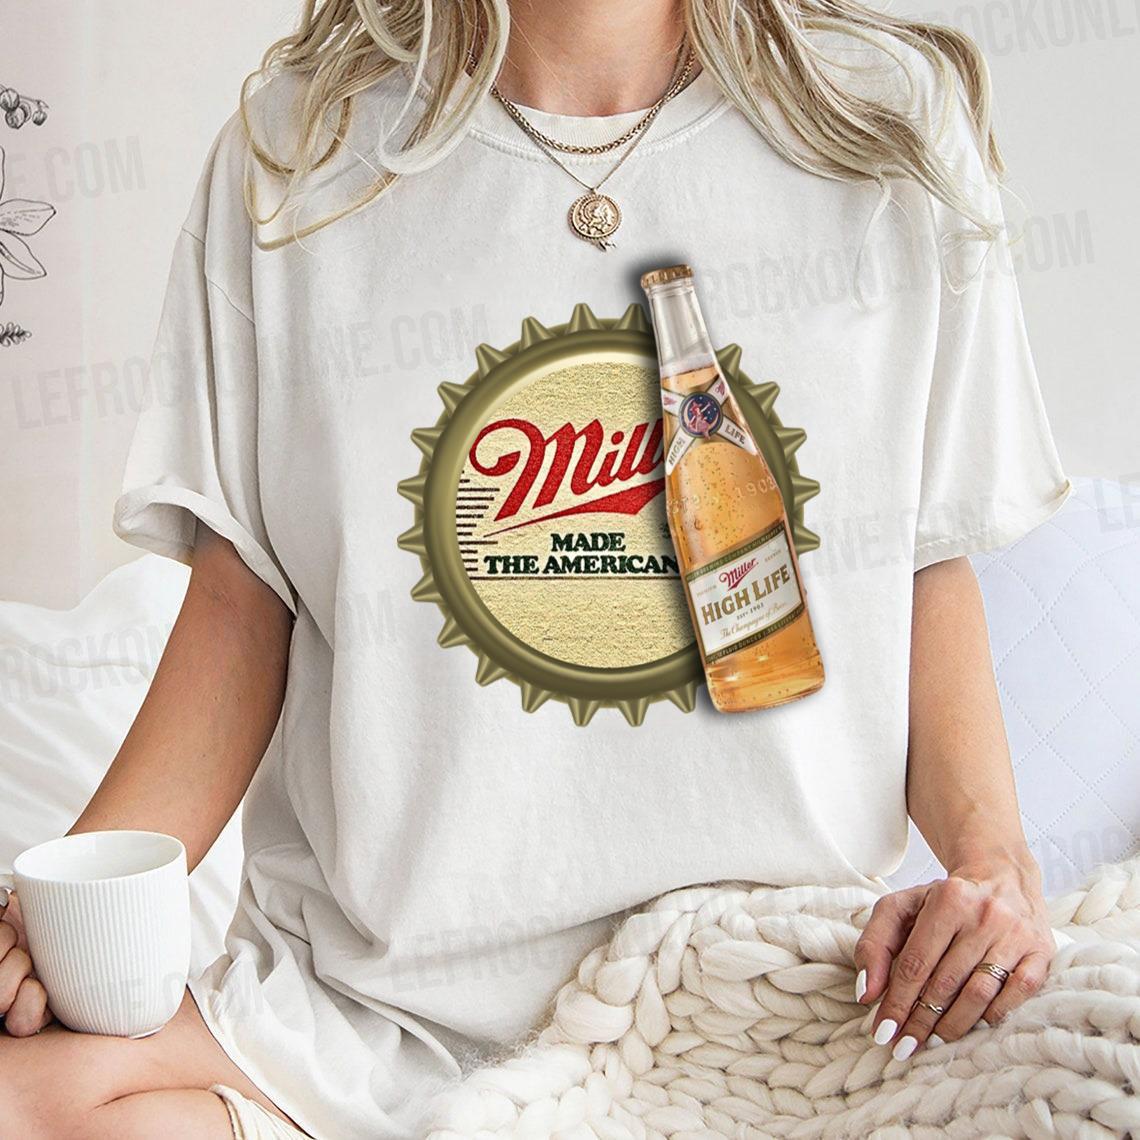 Miller Made The American Way Miller High Life T Shirt